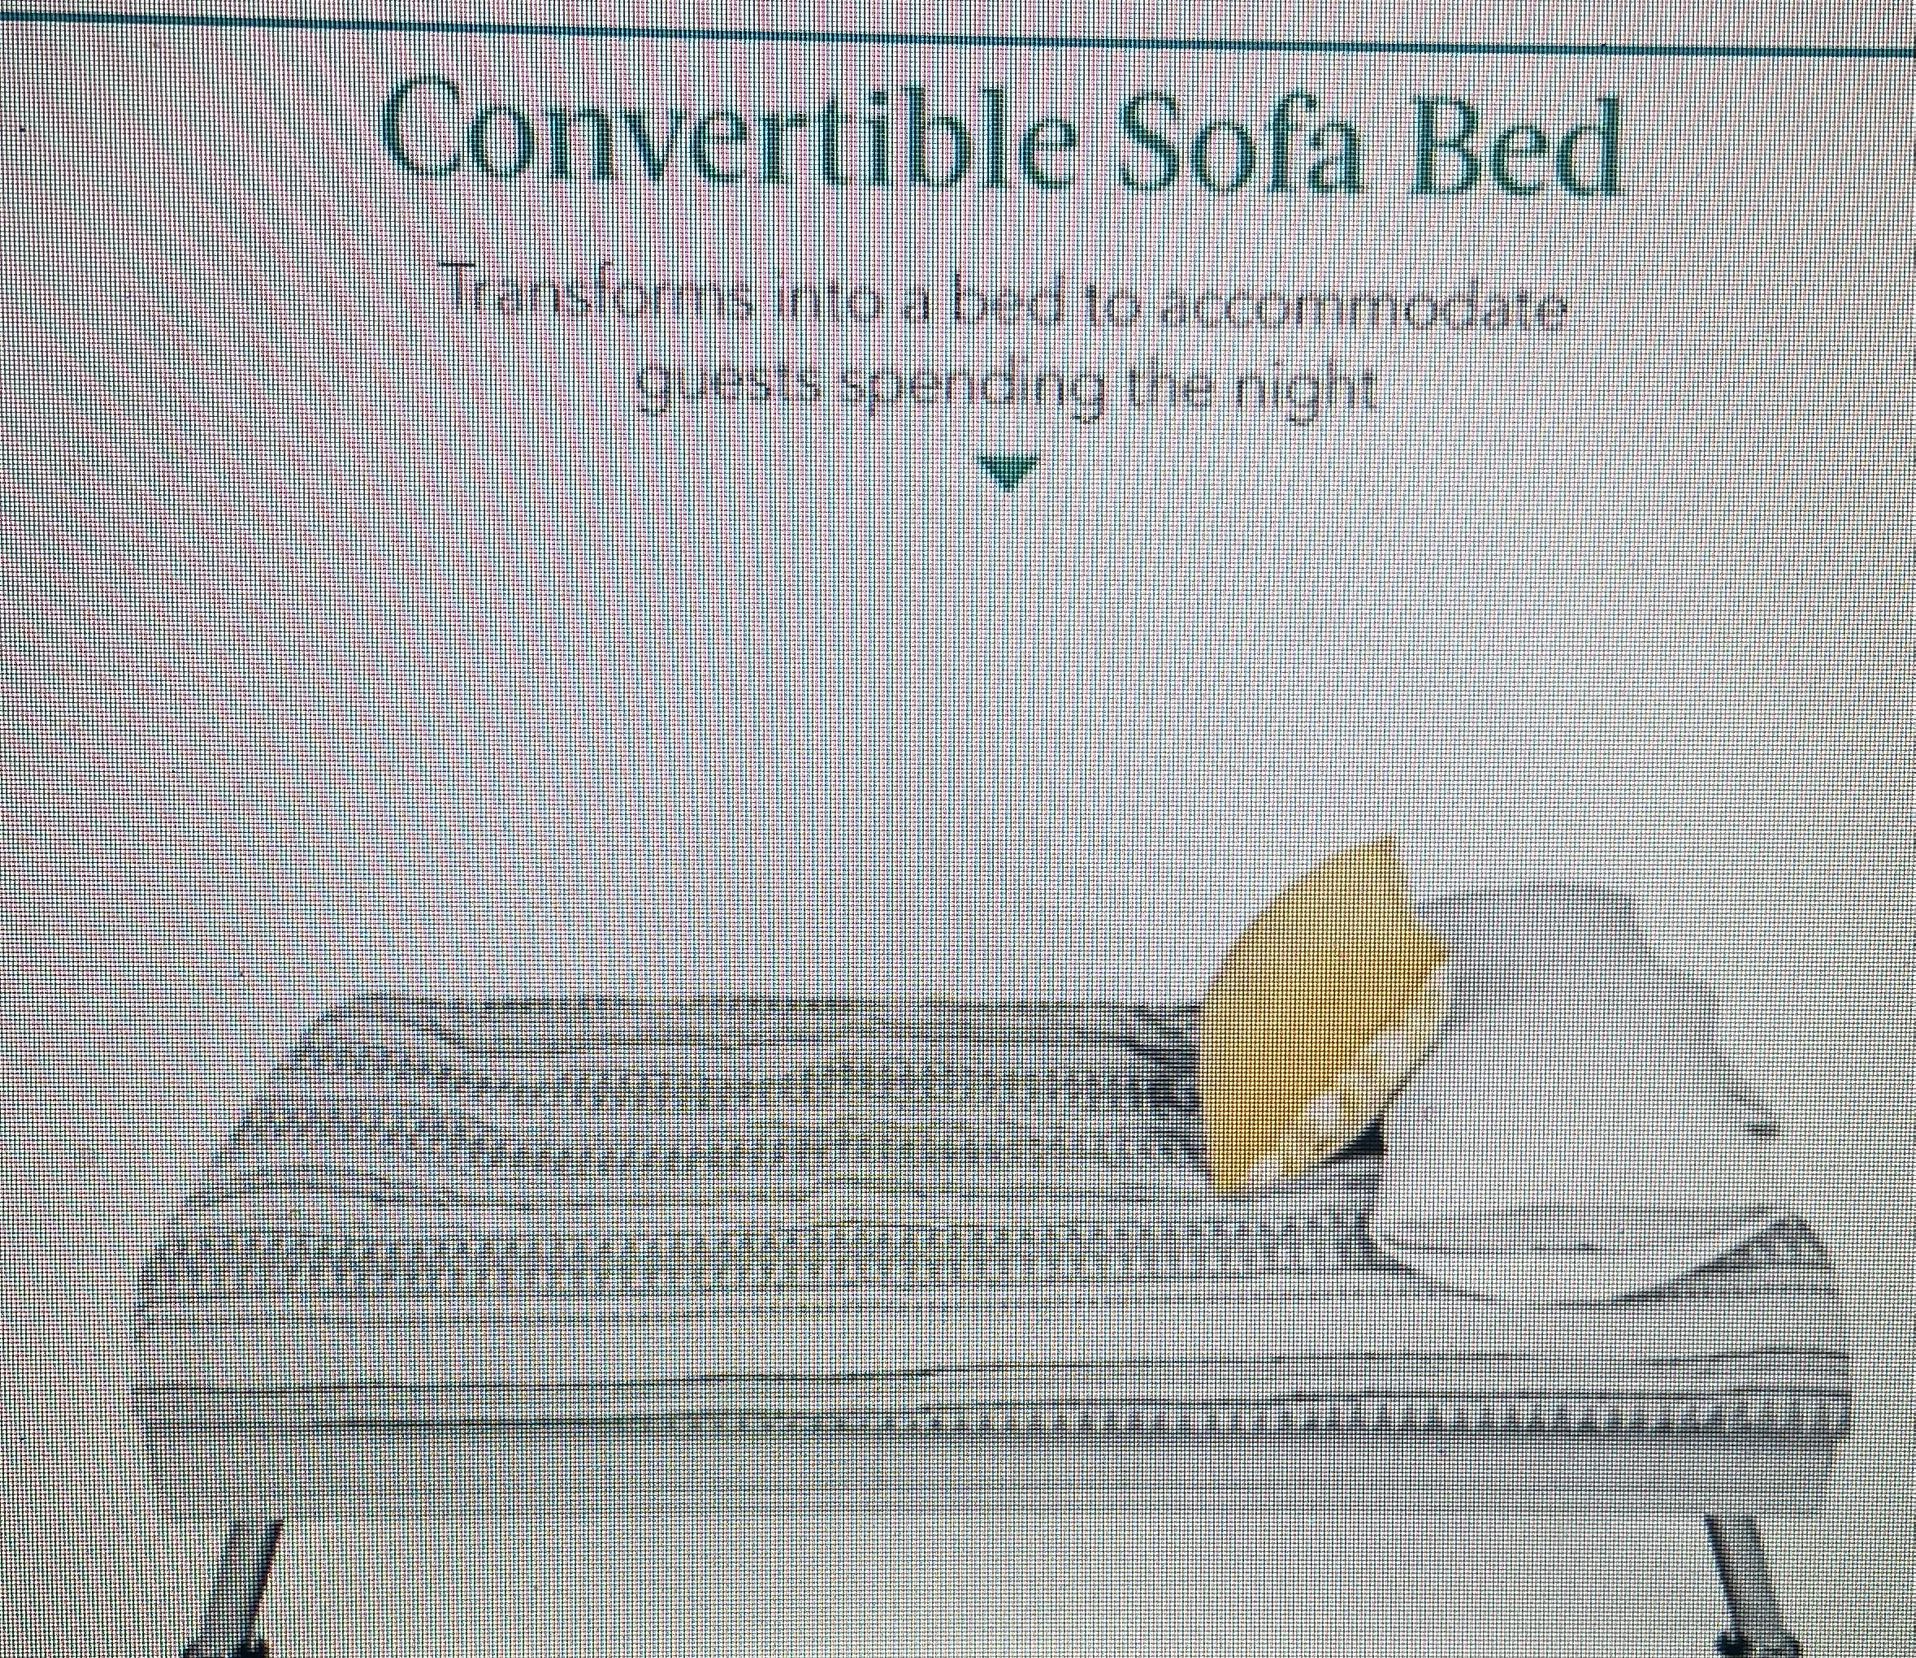 Convertible Folding Sofa Bed